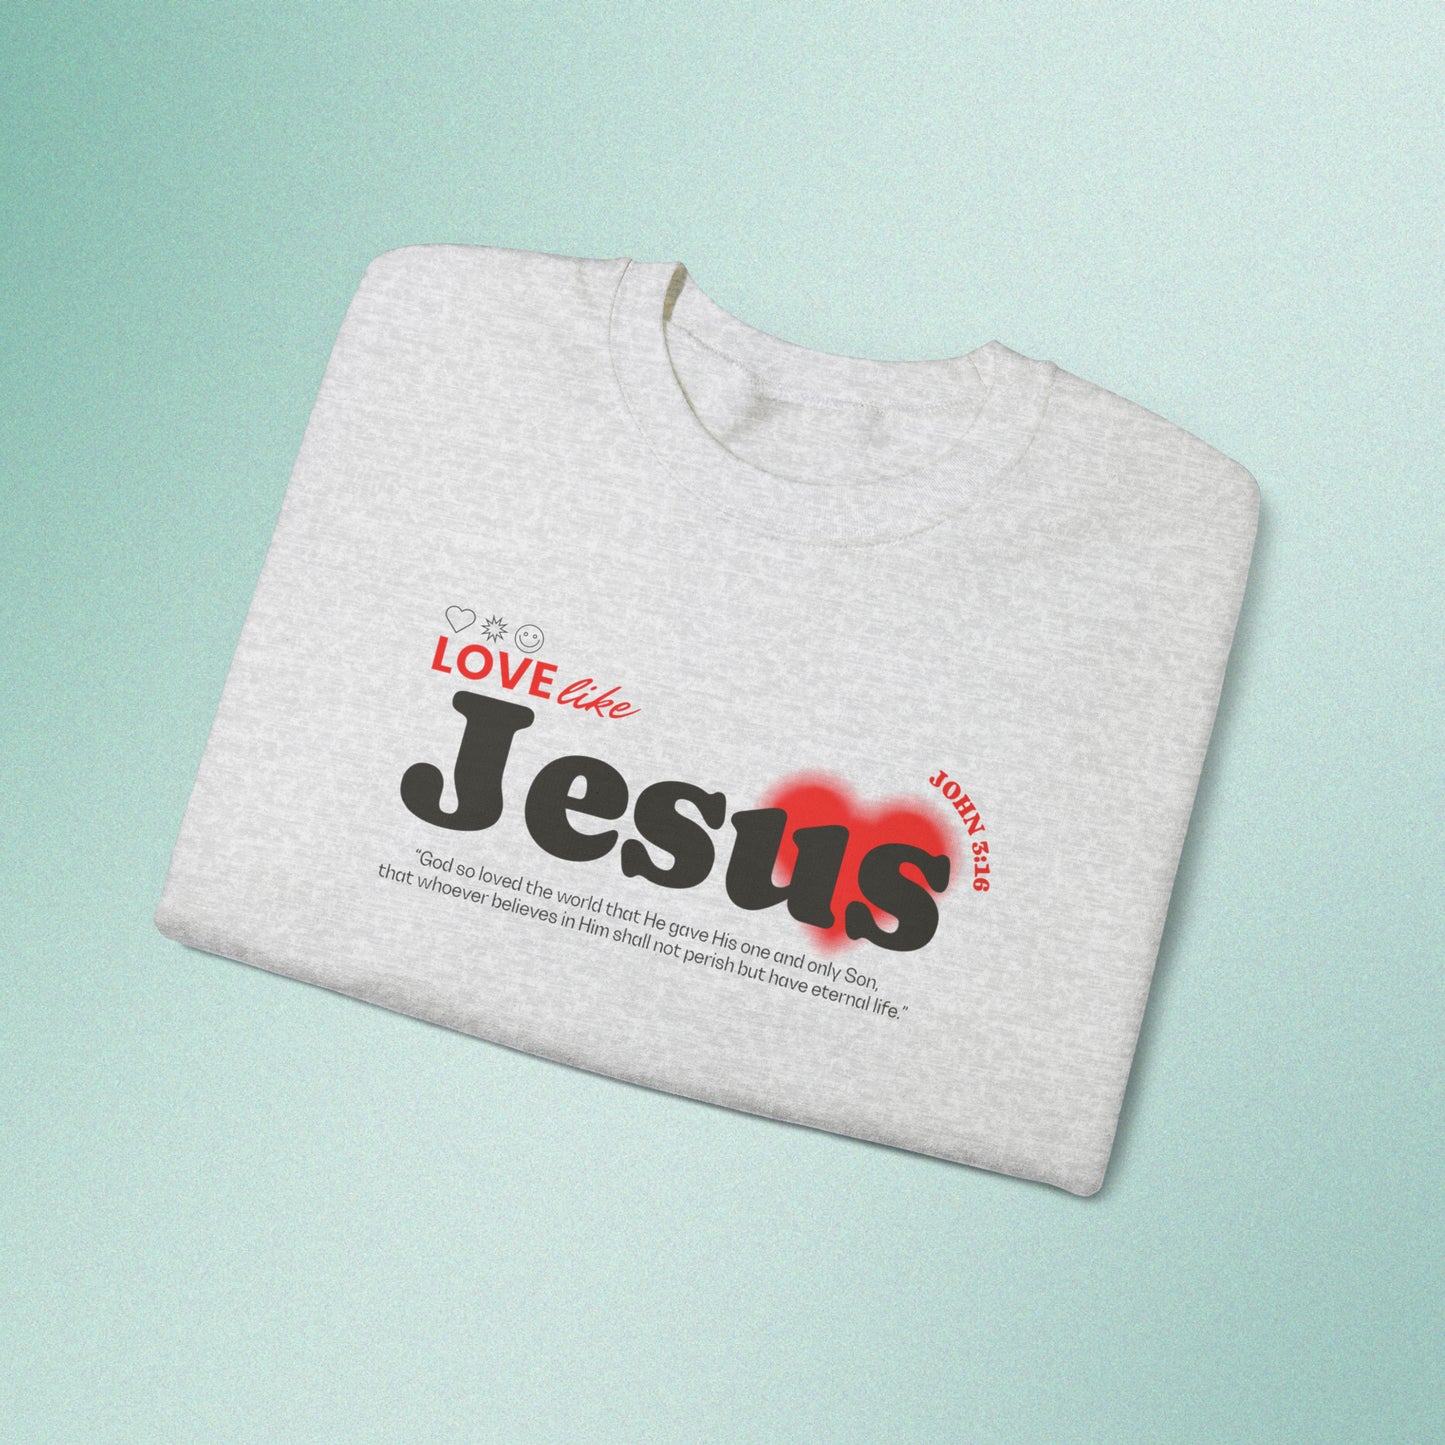 Love Like Jesus" Crewneck Sweater with John 3:16 Verse